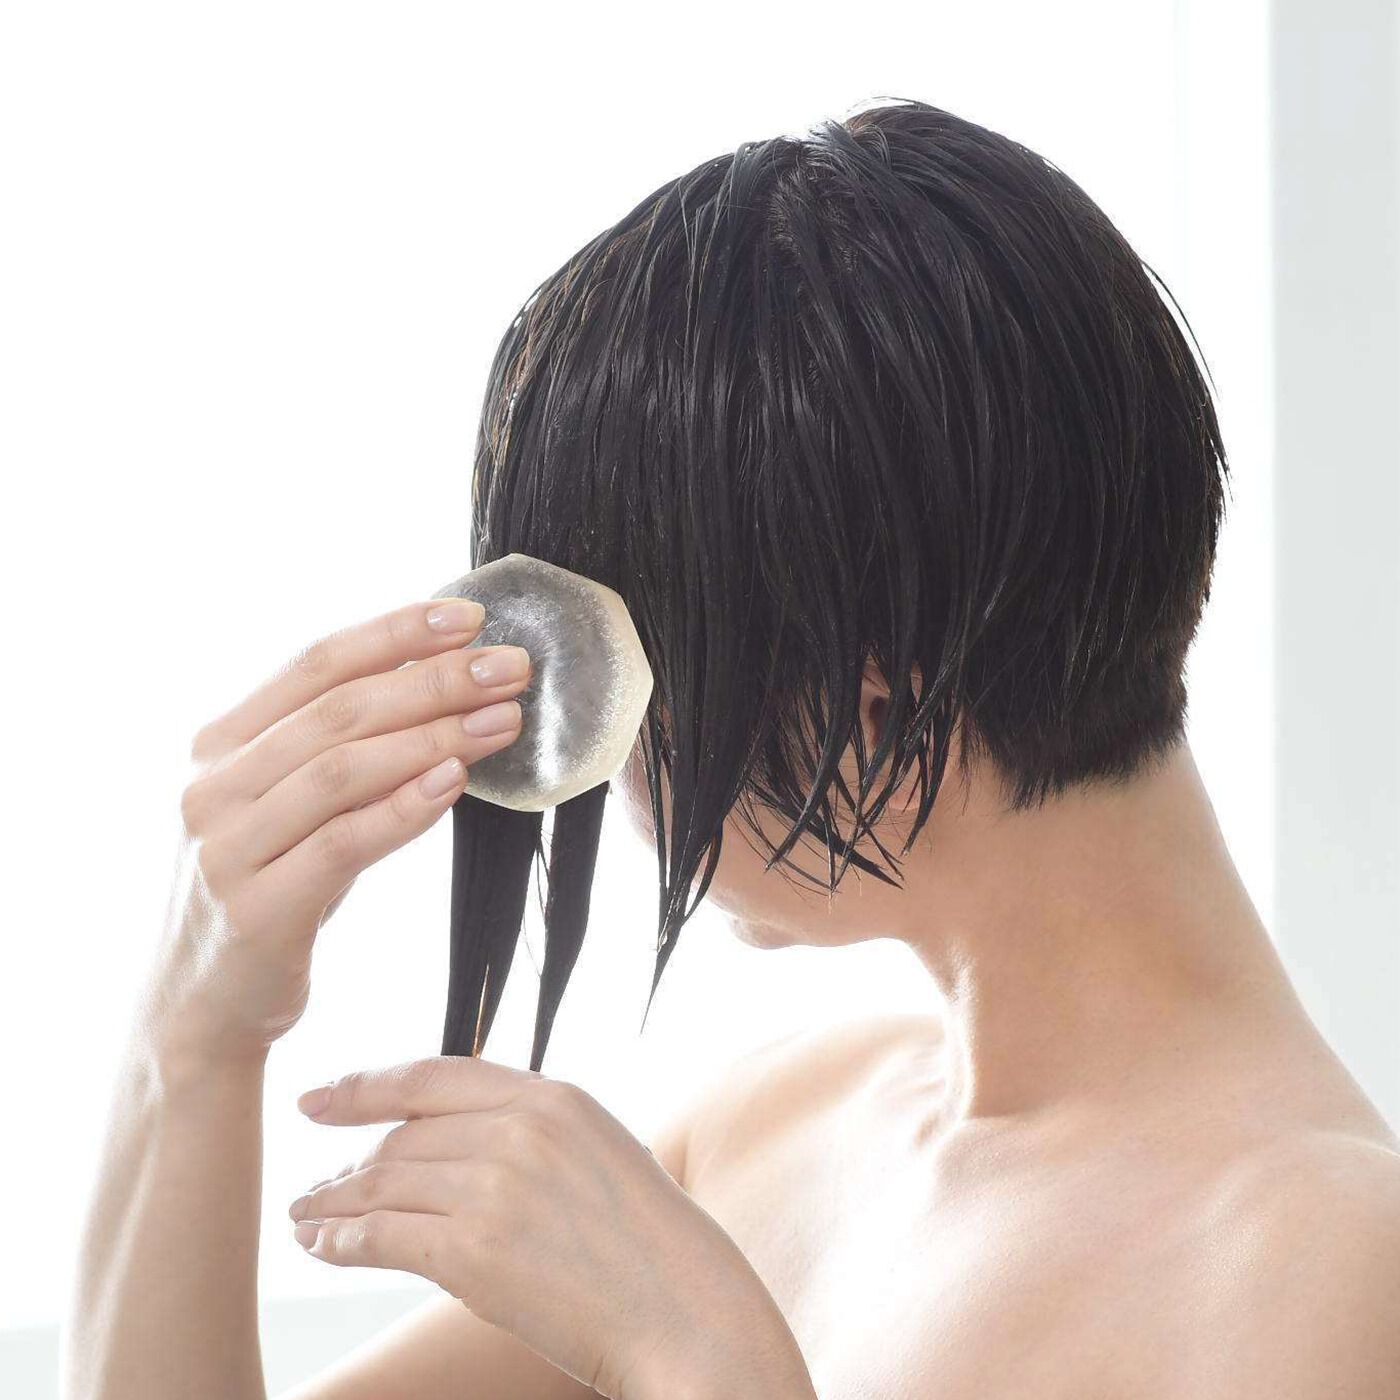 BEAUTY PROJECT|Koharubiyori　スカルプシャンプーバー　ゼラニウム＆ベルガモット〈天然へちま製トレイ付き〉|髪と頭皮を充分に濡らしたら、髪の付け根から毛先に向けて滑らせるように数回塗布します。